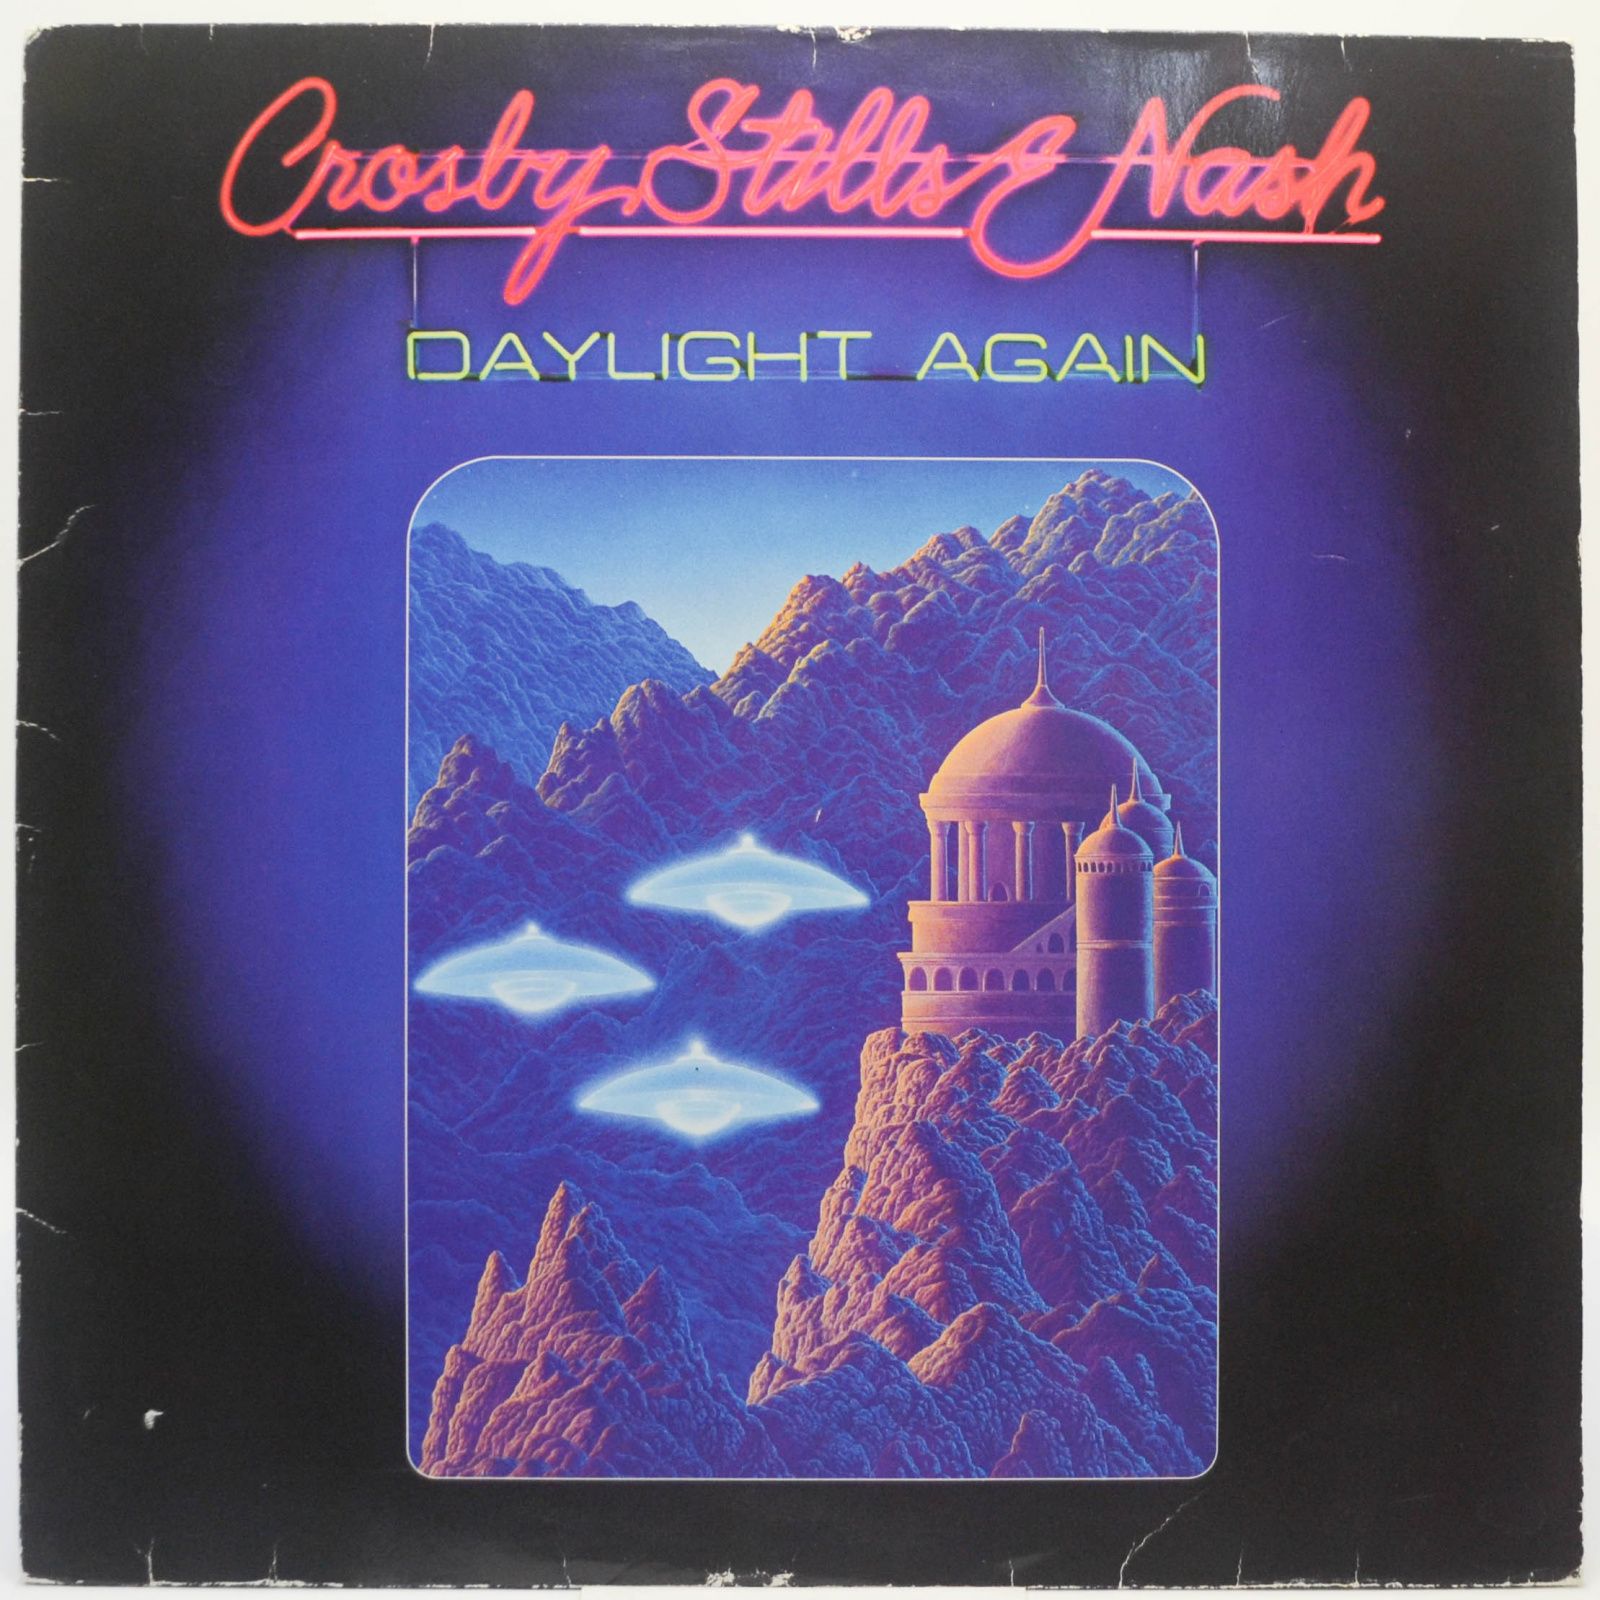 Crosby, Stills & Nash — Daylight Again, 1982